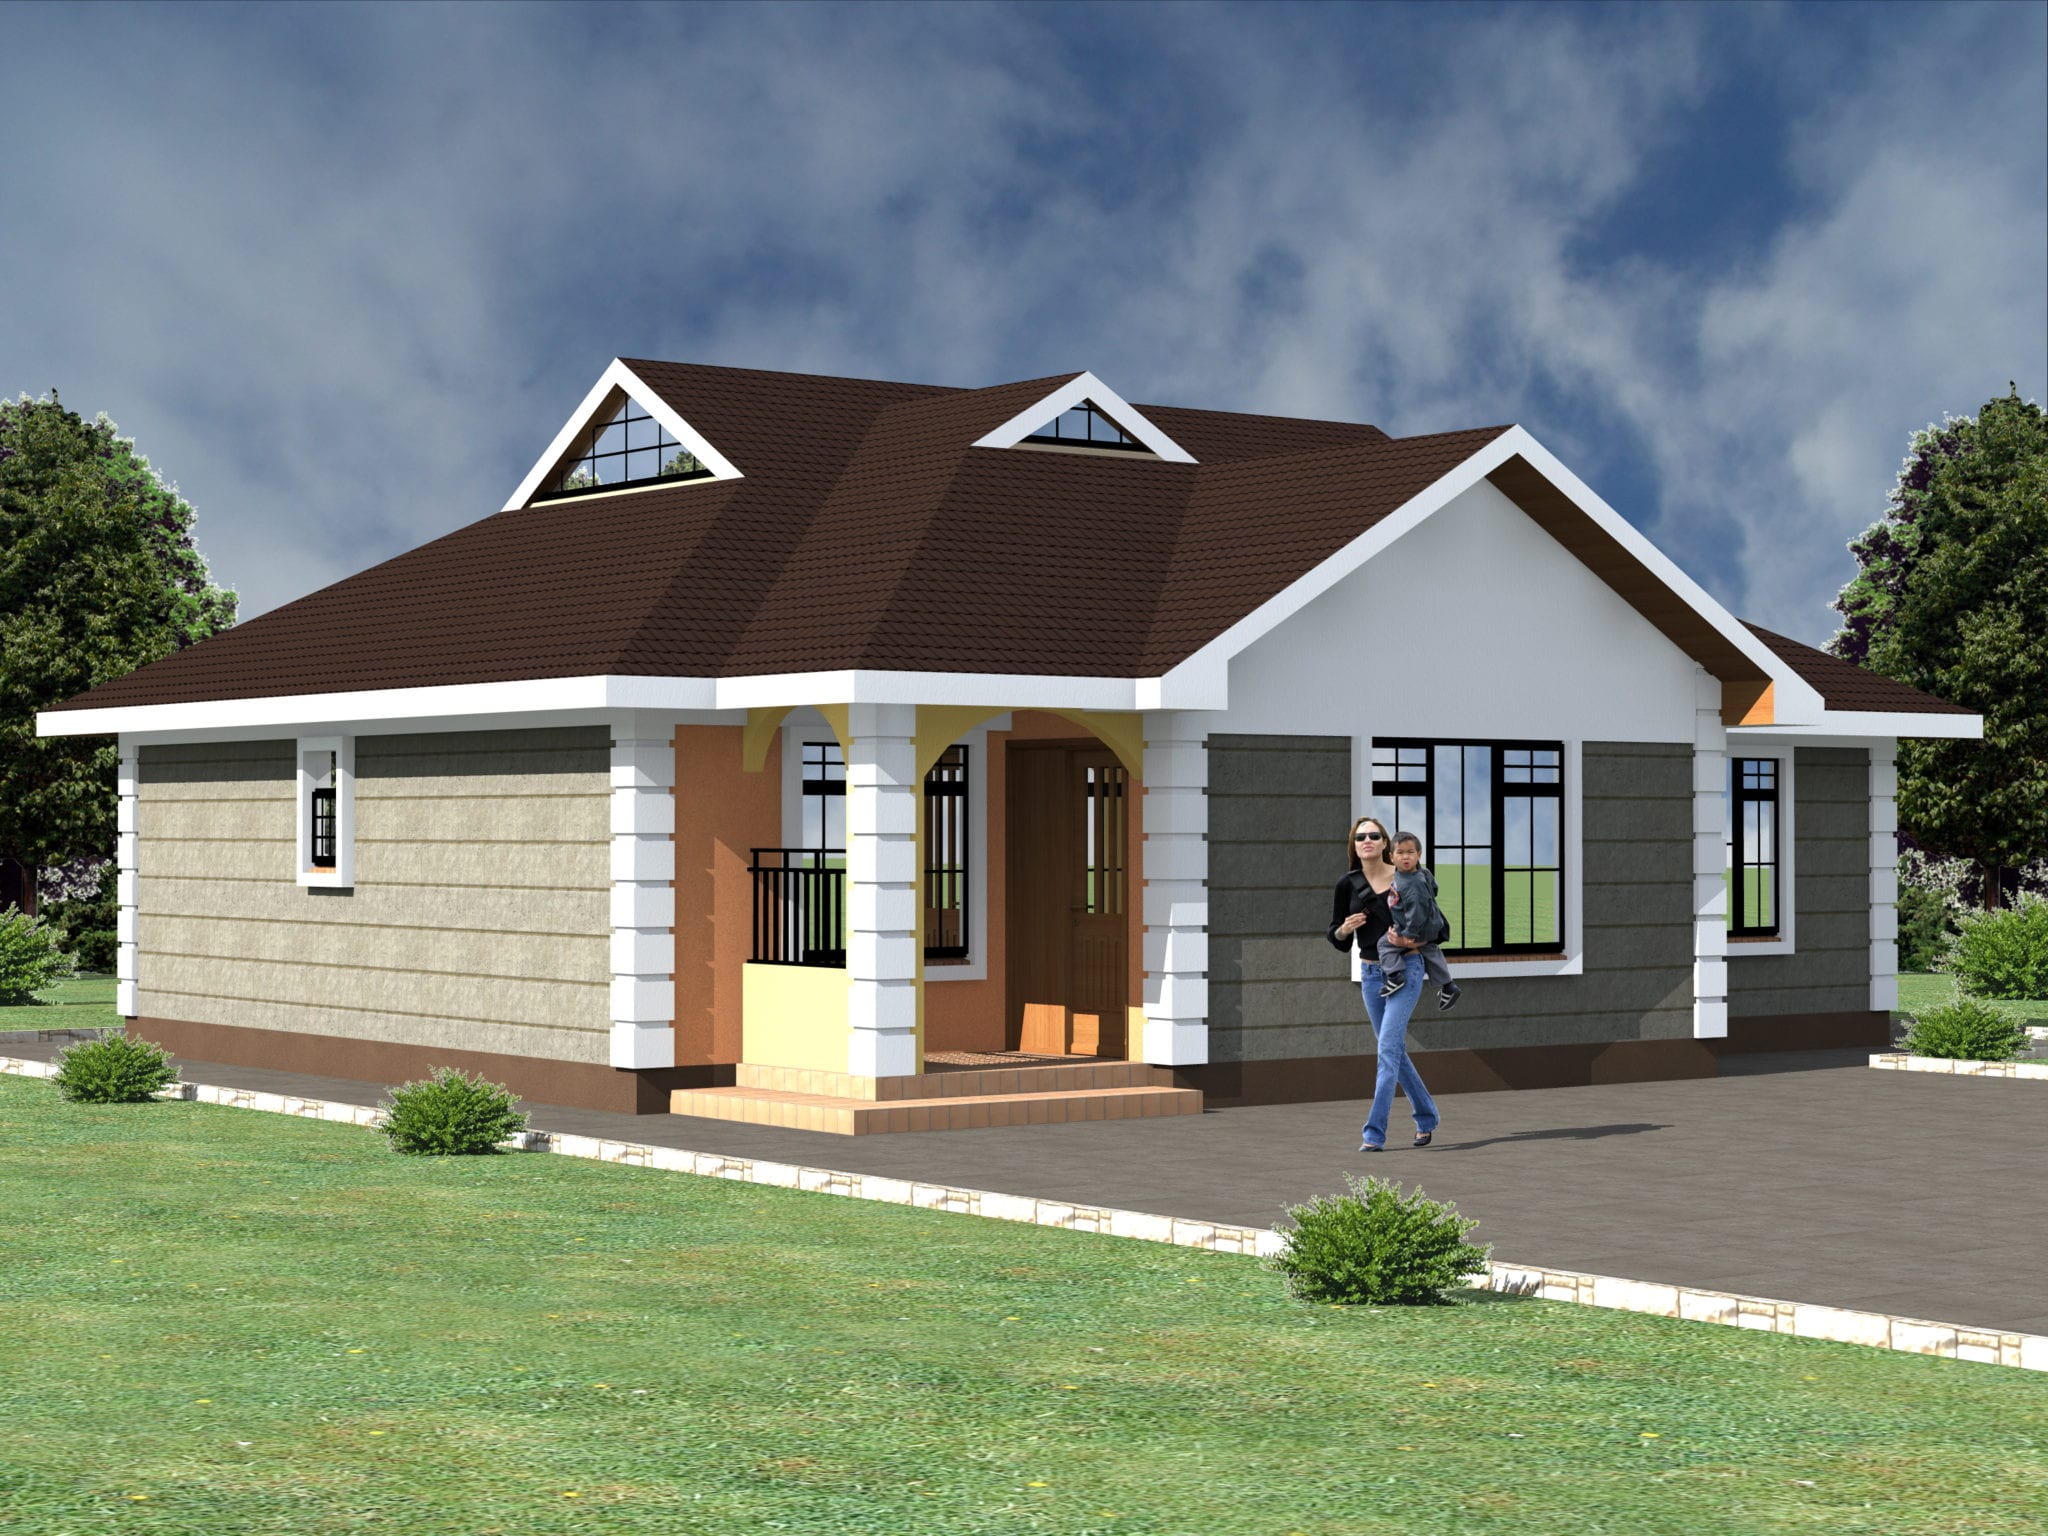 4 bedroom bungalow house plans kenya |HPD Consult